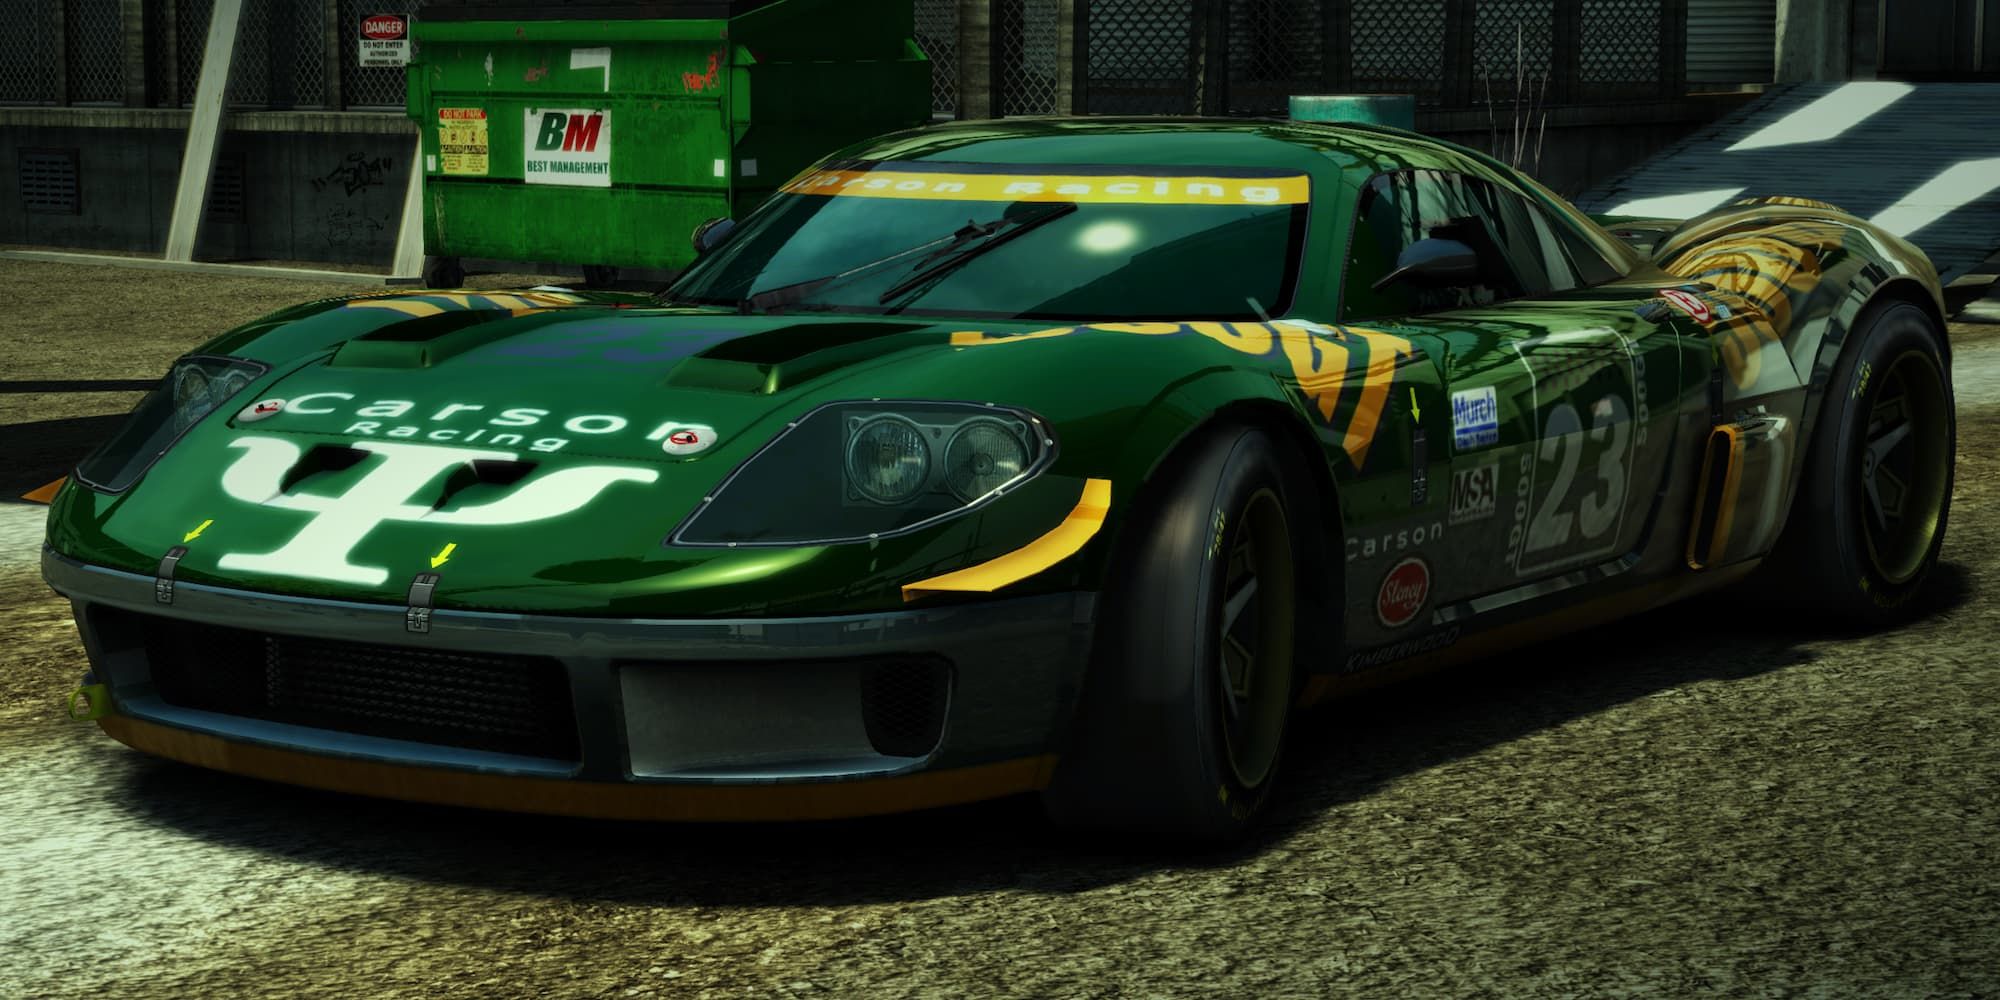 Racing 500 GT in the junkyard